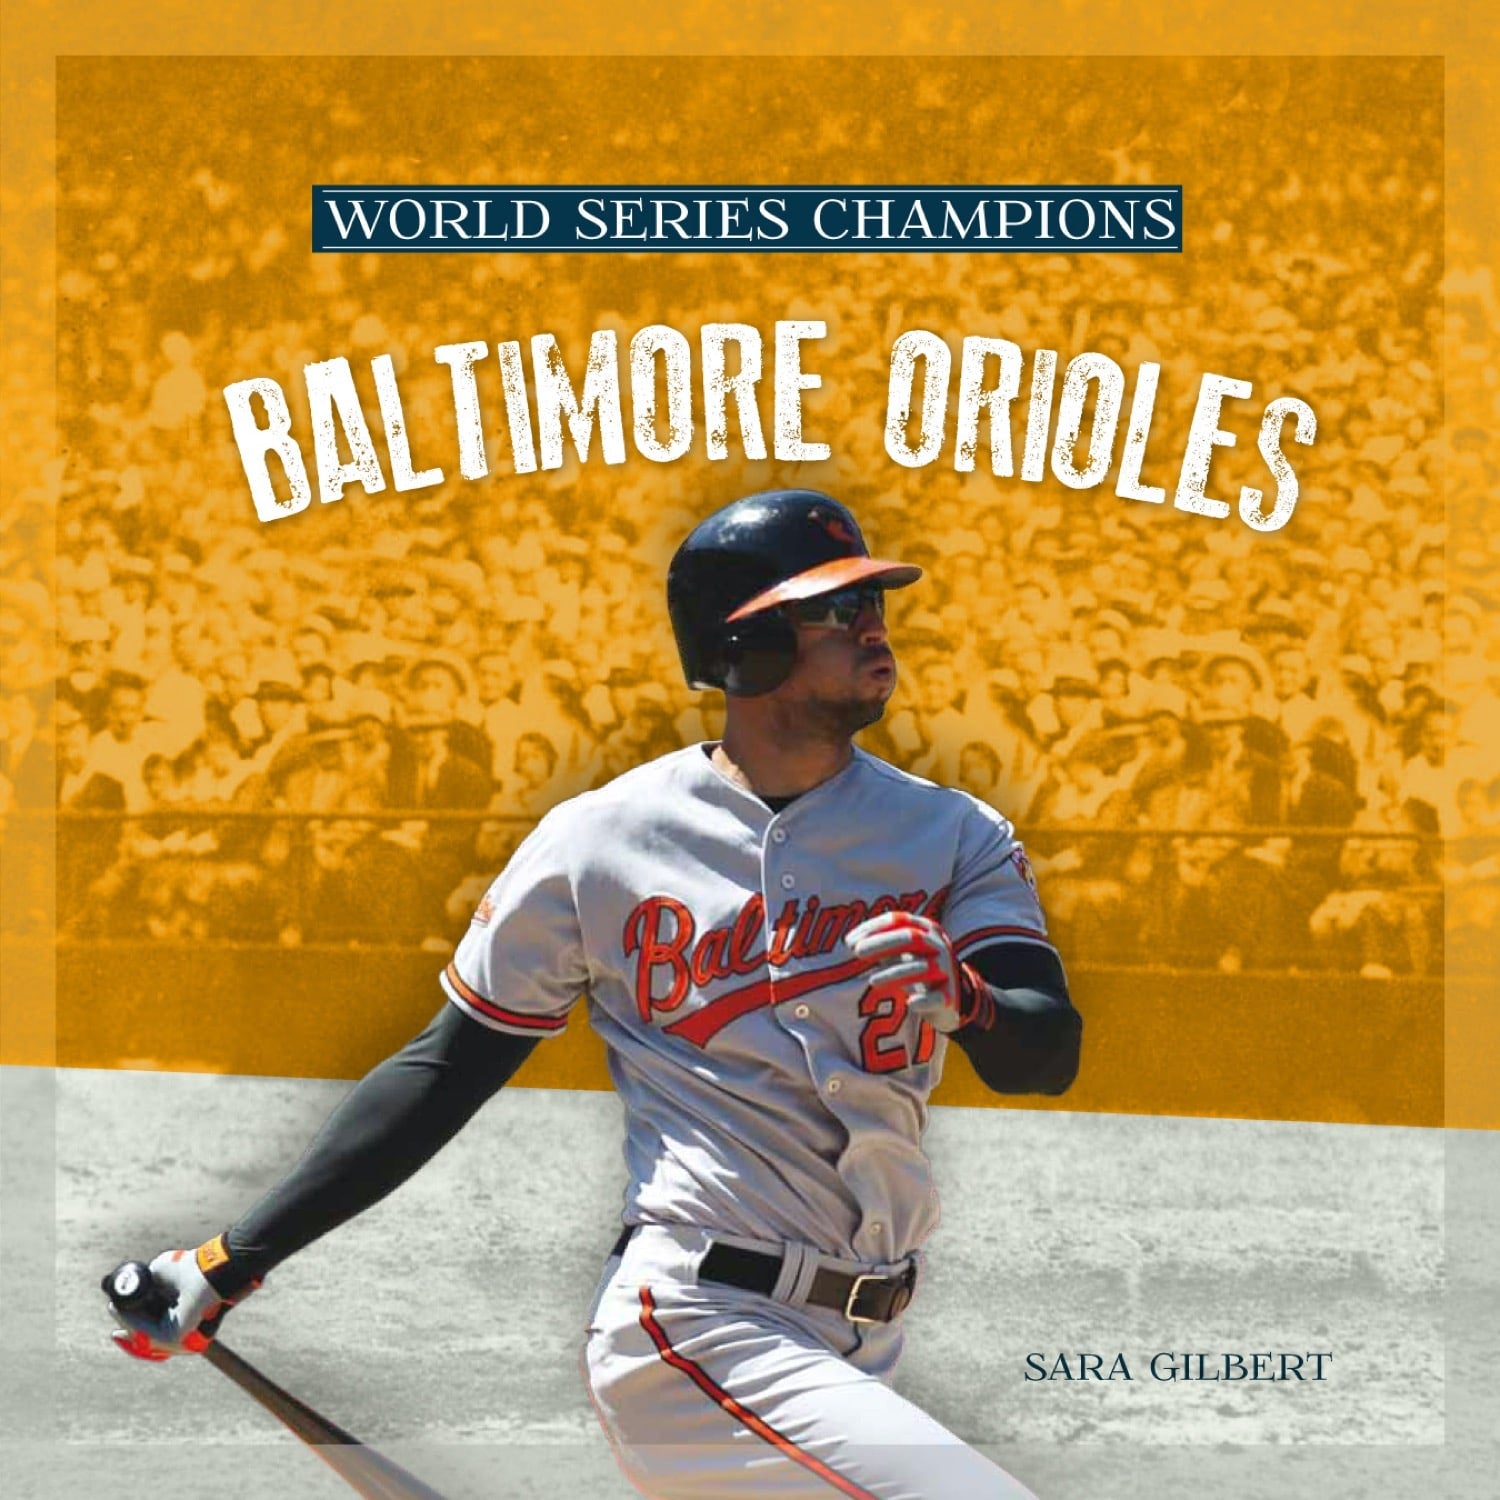 World Series Champions: Baltimore Orioles – The Creative Company Shop